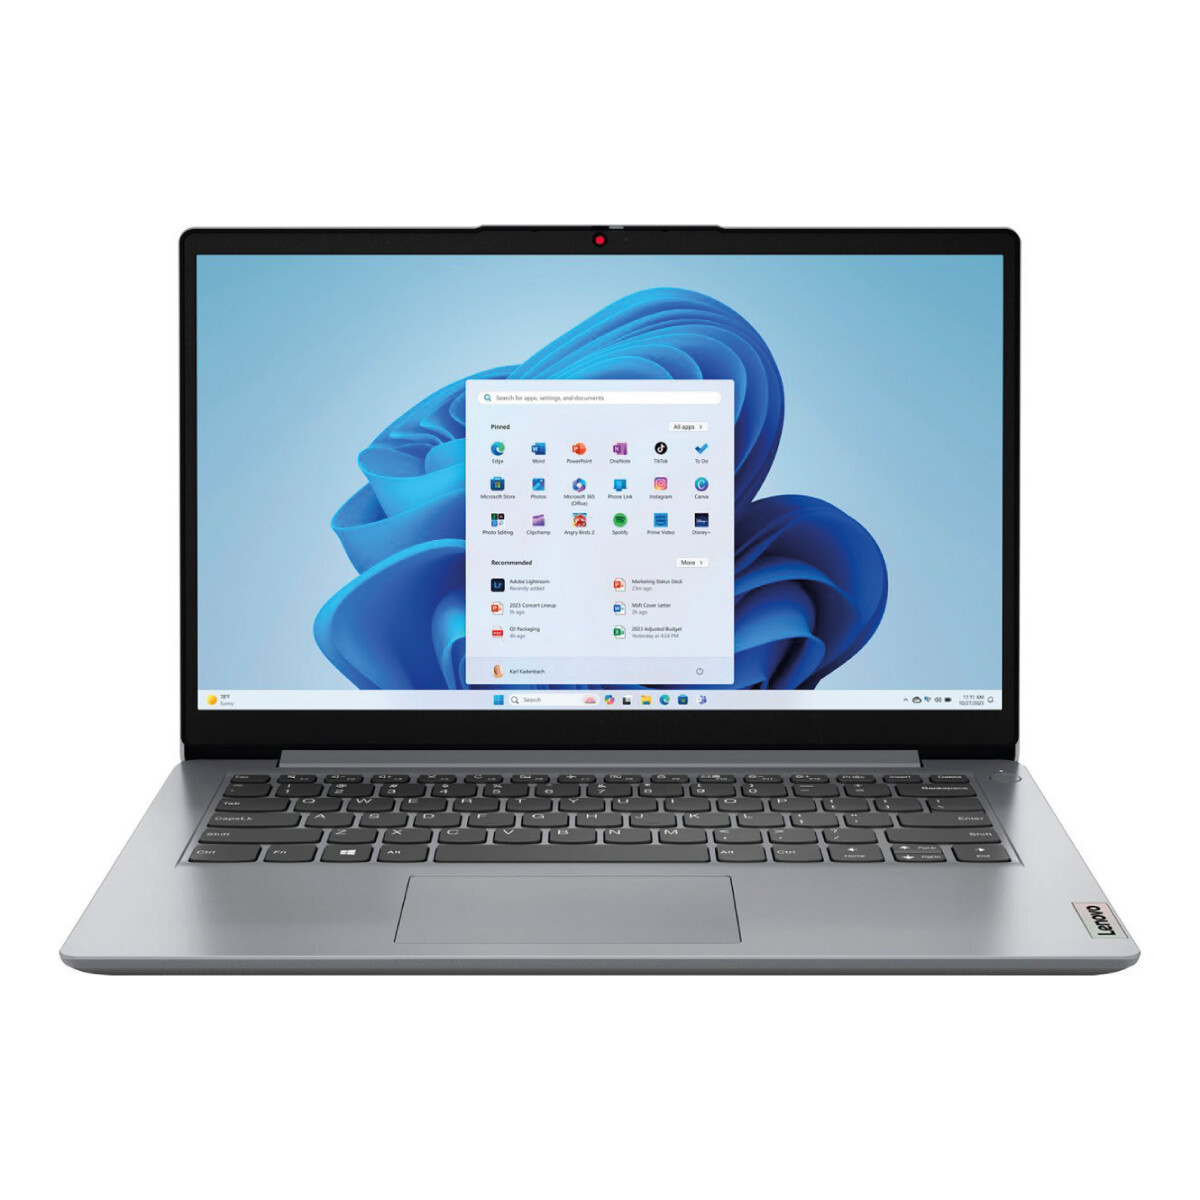 OUTLET - Notebook LENOVO Ideapad 1 14' HD 128GB SSD / 4GB RAM N4020 